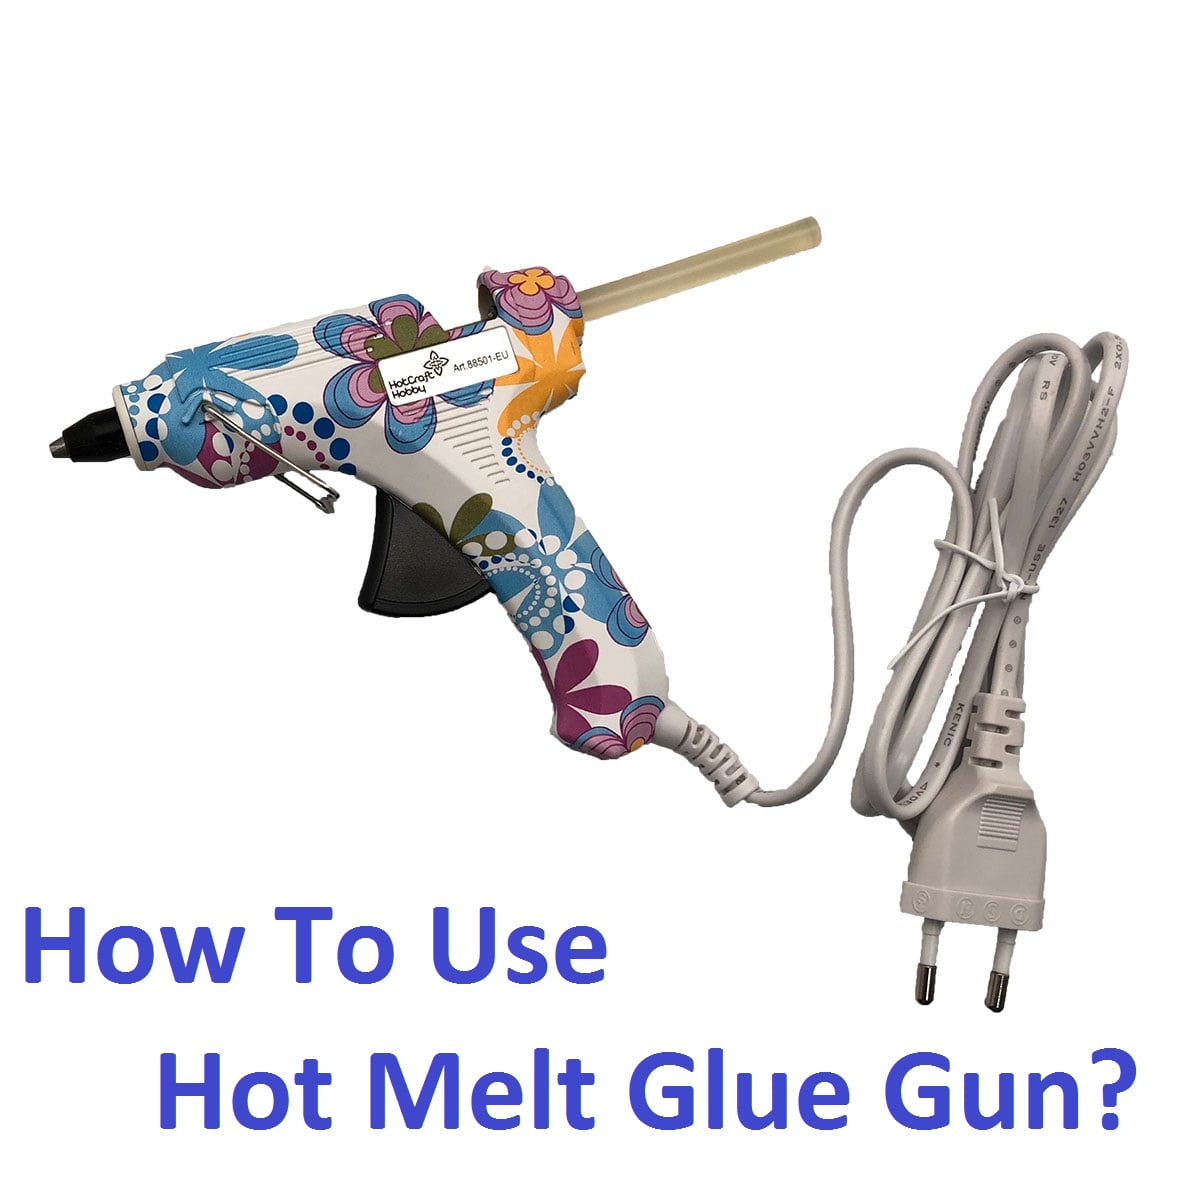 How To Use Hot Melt Glue Gun?